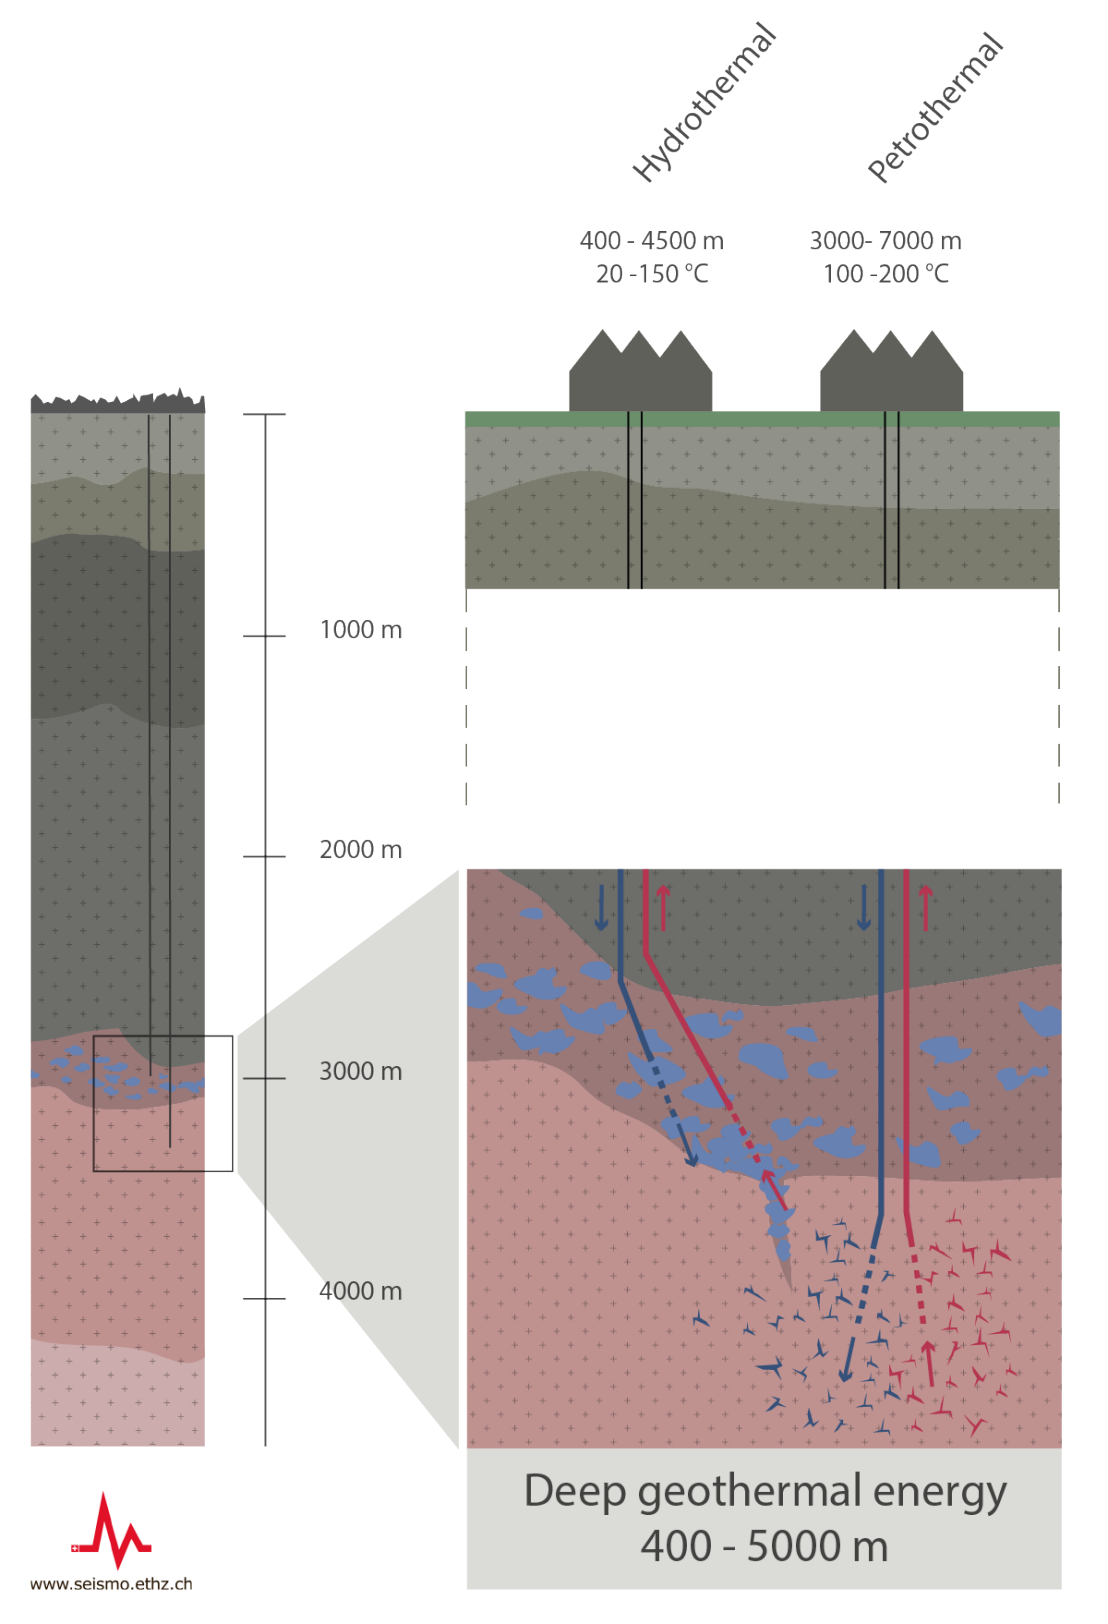 Enlarged view: Forms of deep geothermal energy 